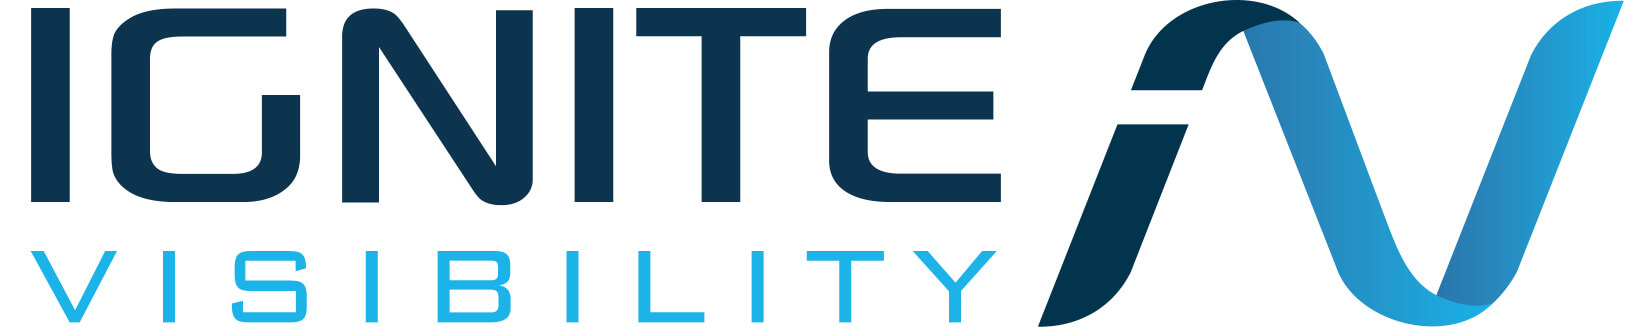 Top Dental SEO Company Logo: Ignite Visibility